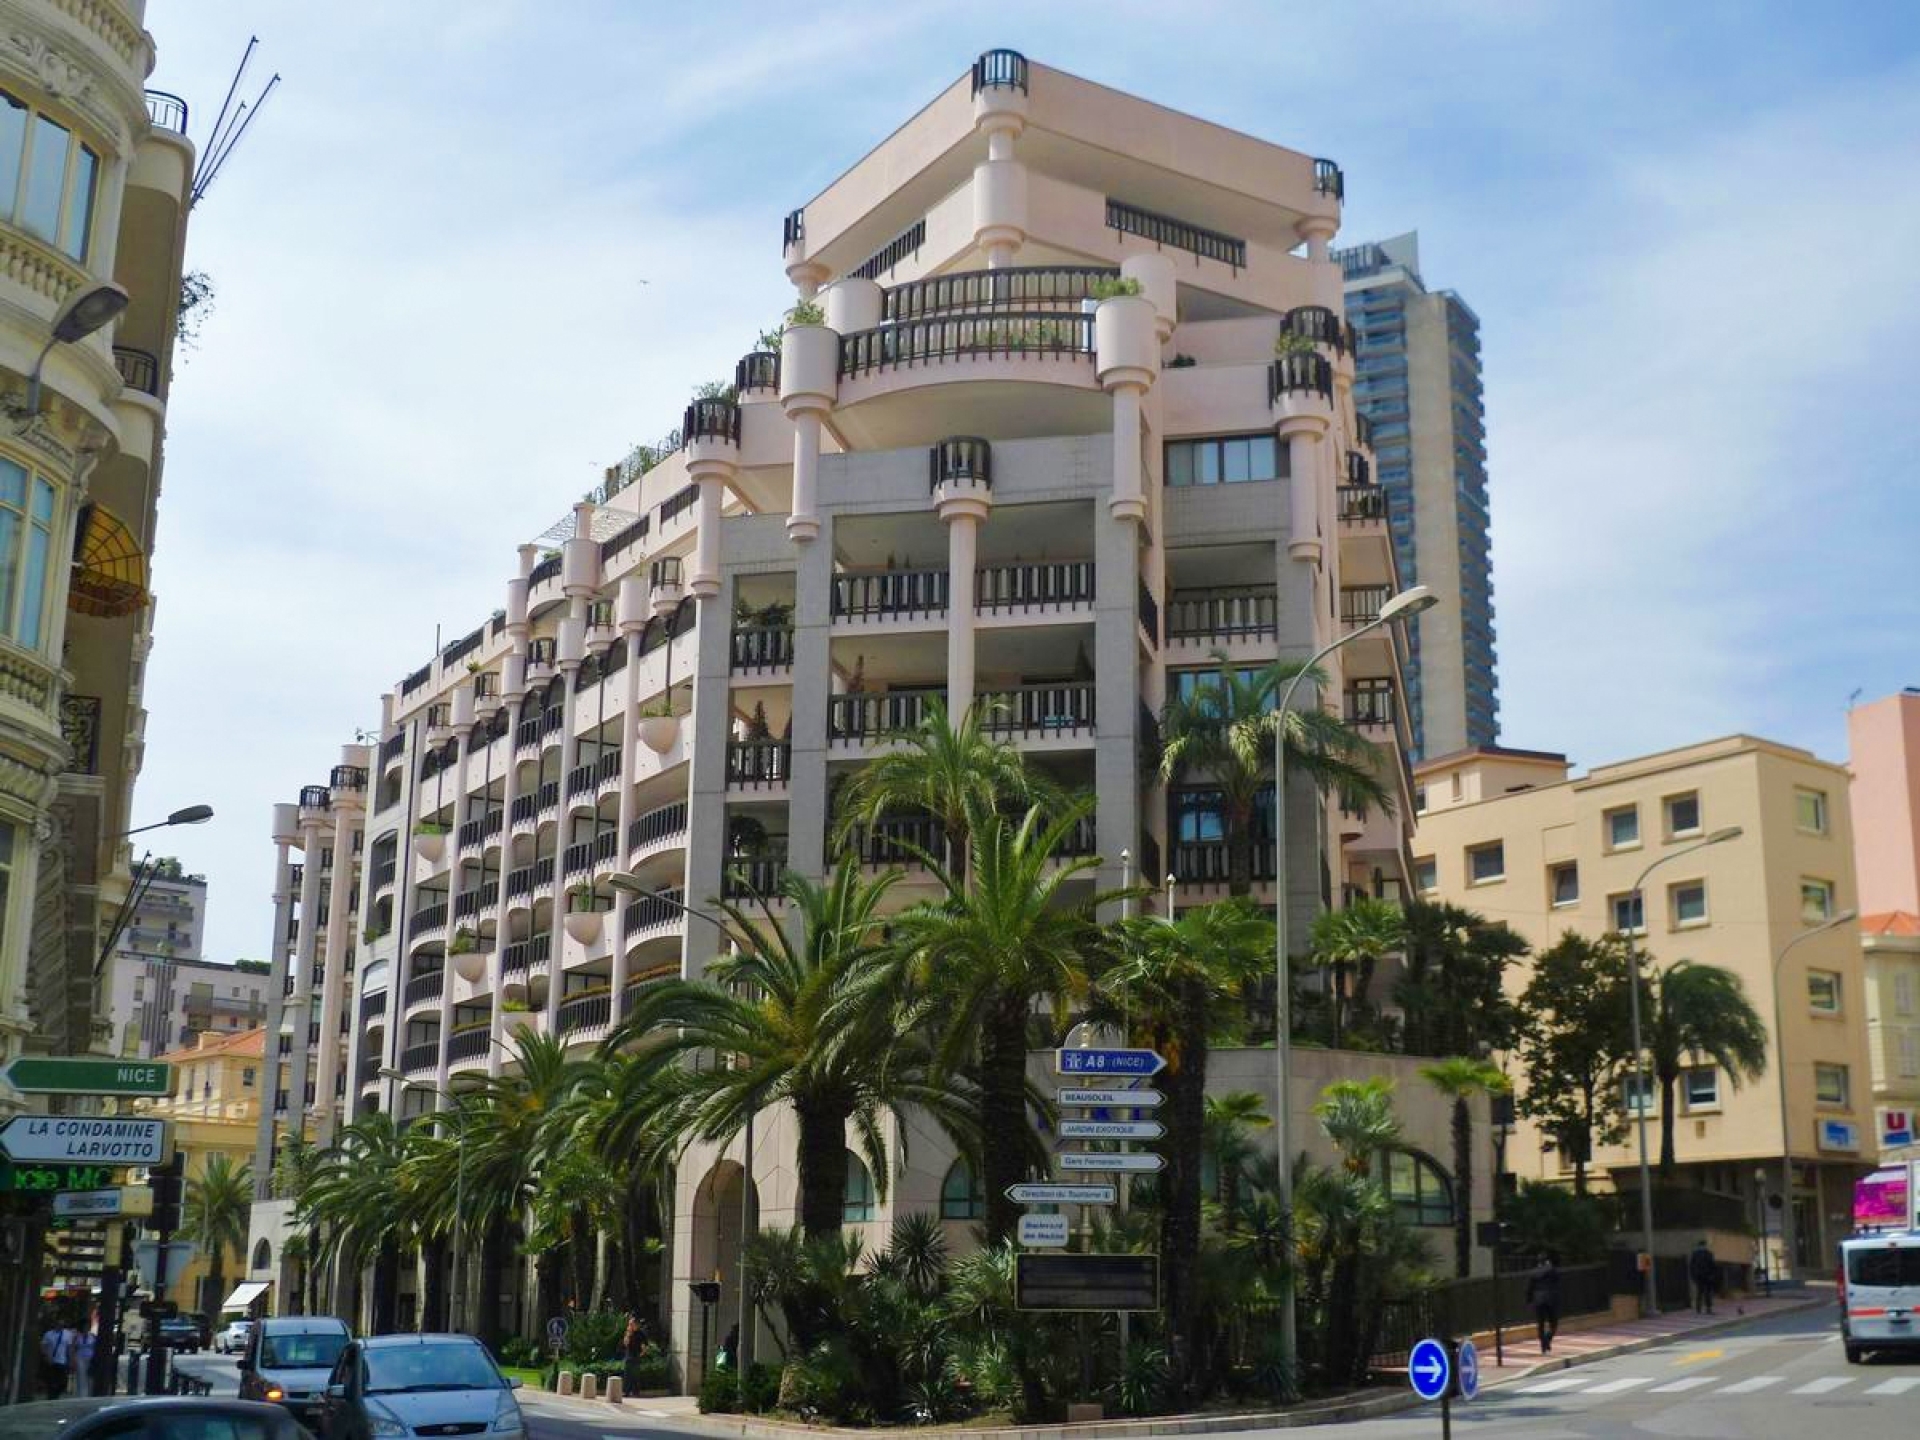 Dotta Bureaux a vendre - MONTE-CARLO PALACE - Carre d'Or - Monaco - imgd